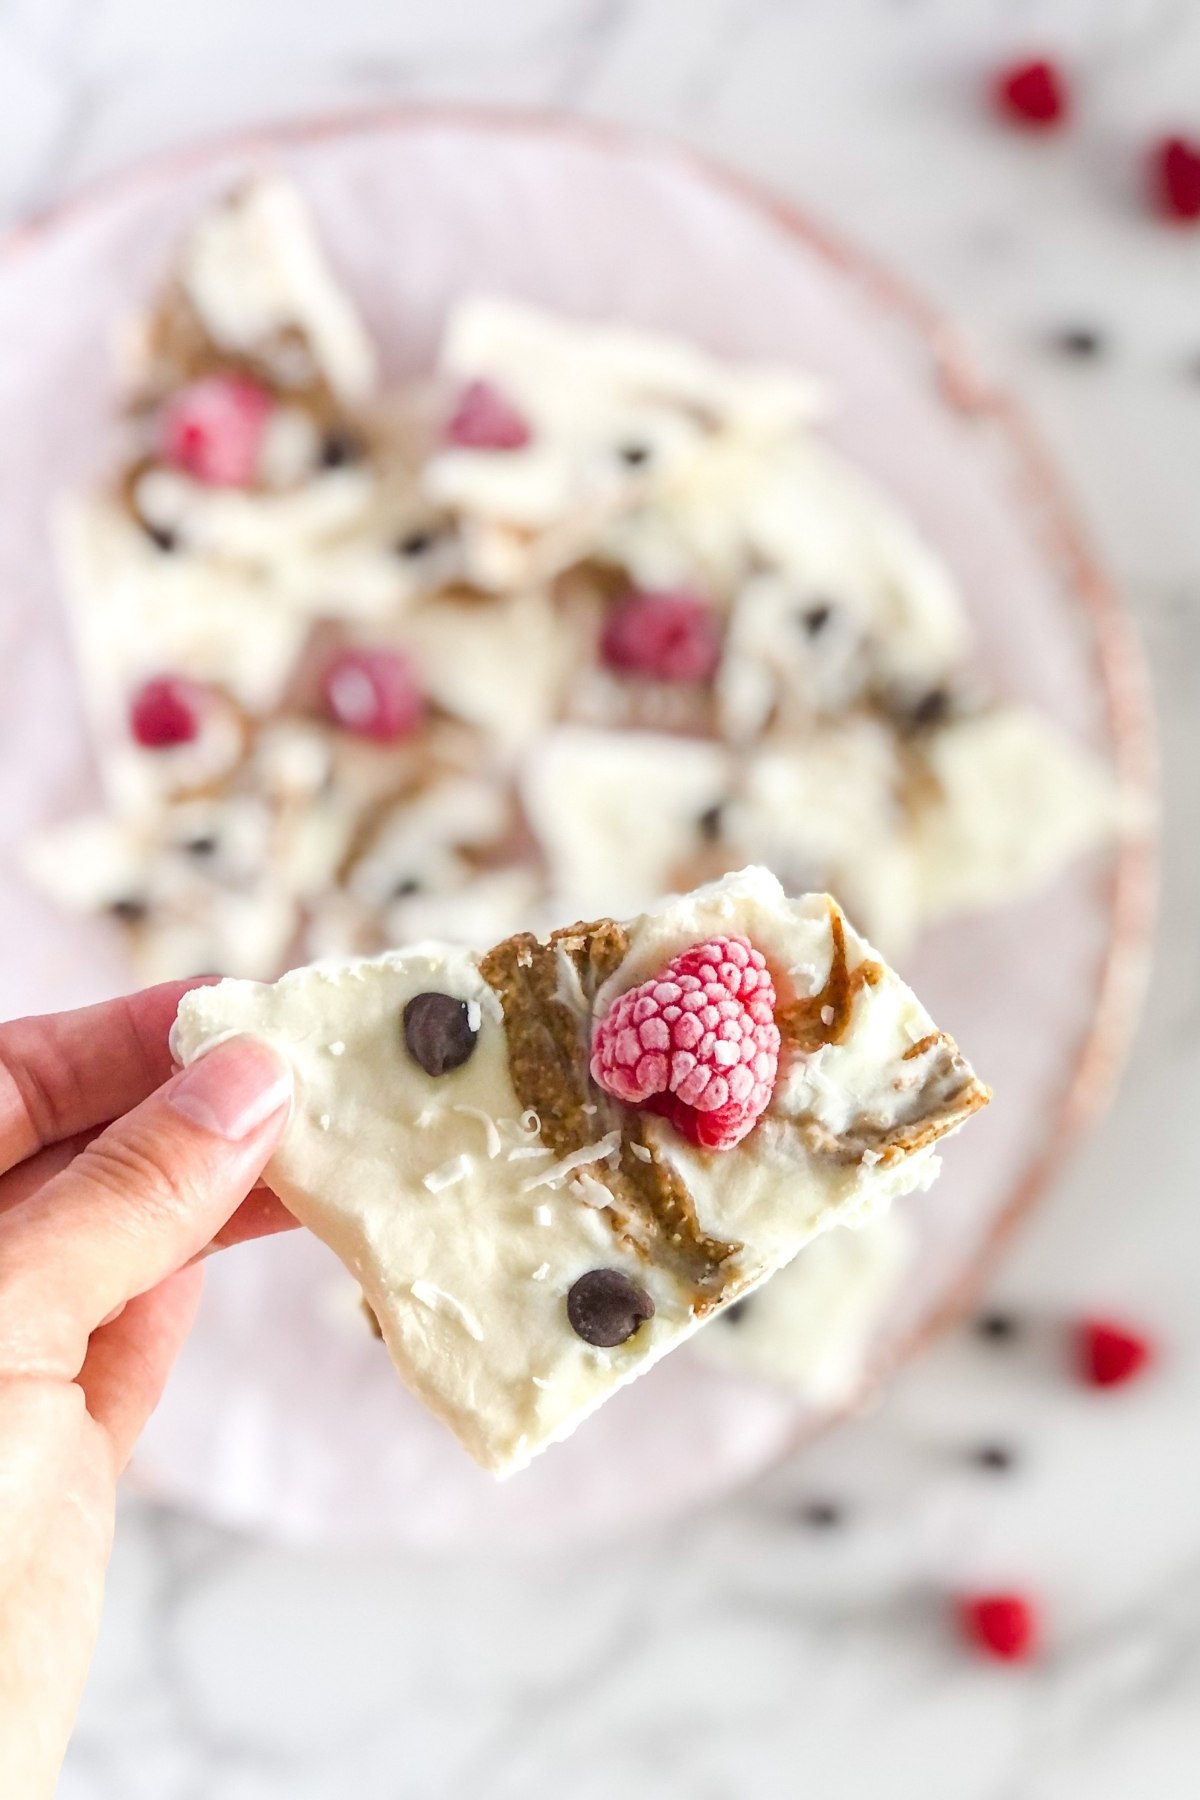 frozen greek yogurt bark with raspberries, chocolate chips, and almond butter swirl